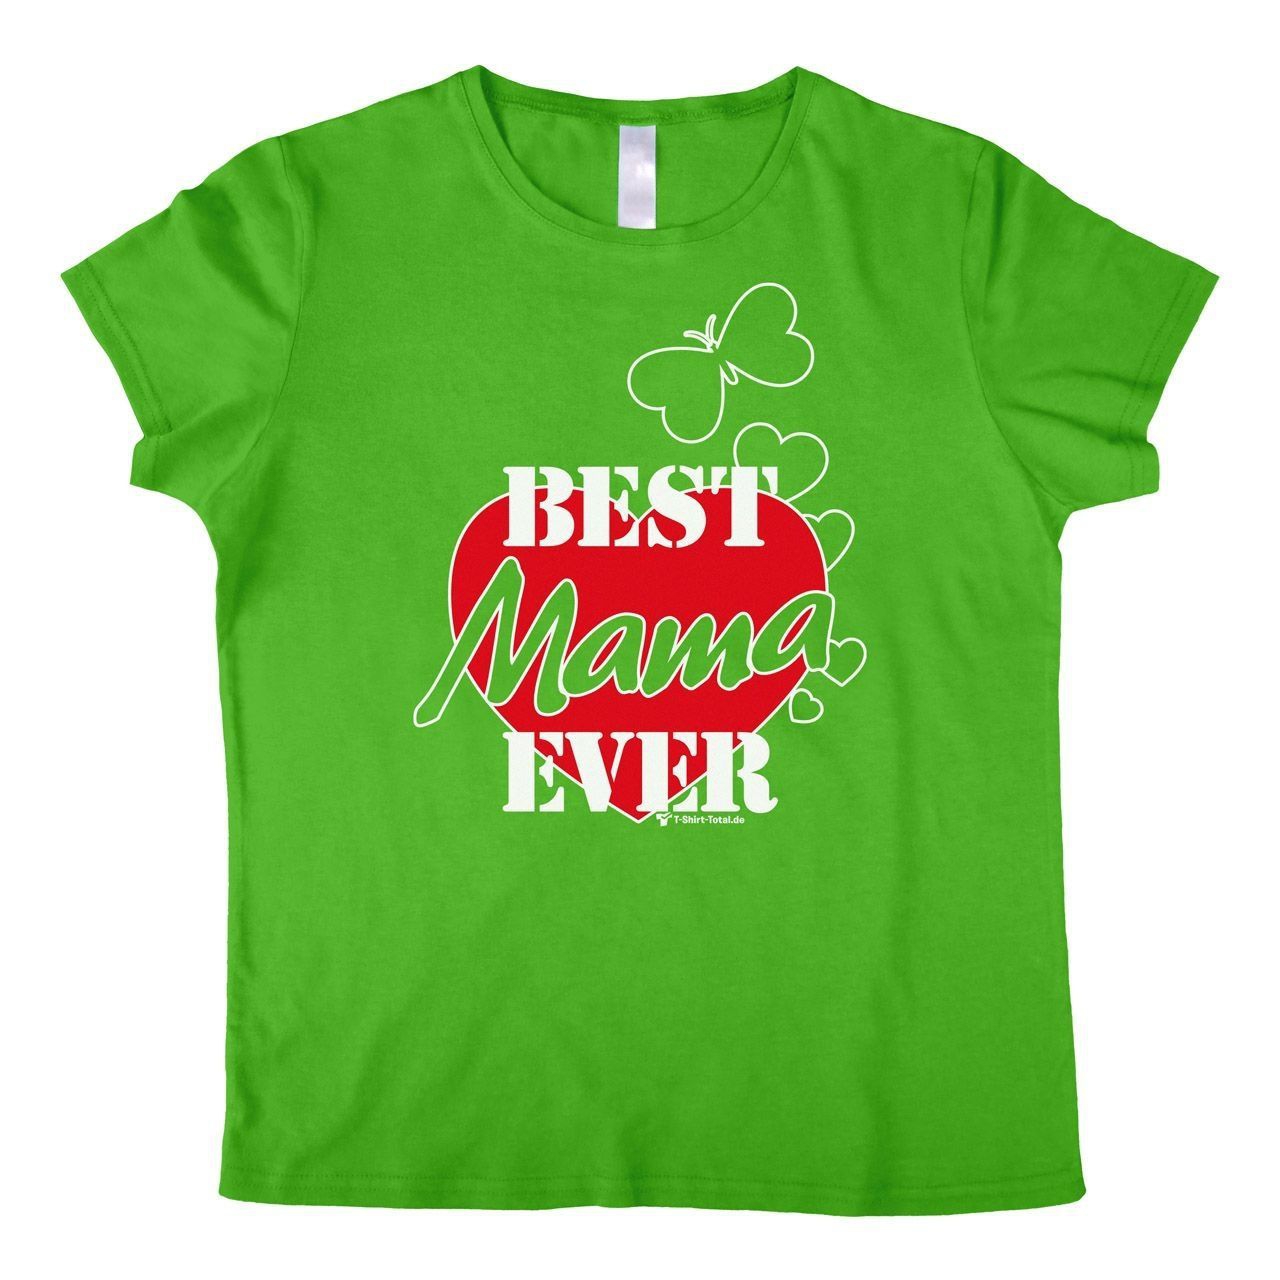 Best Mama ever Woman T-Shirt grün Extra Large